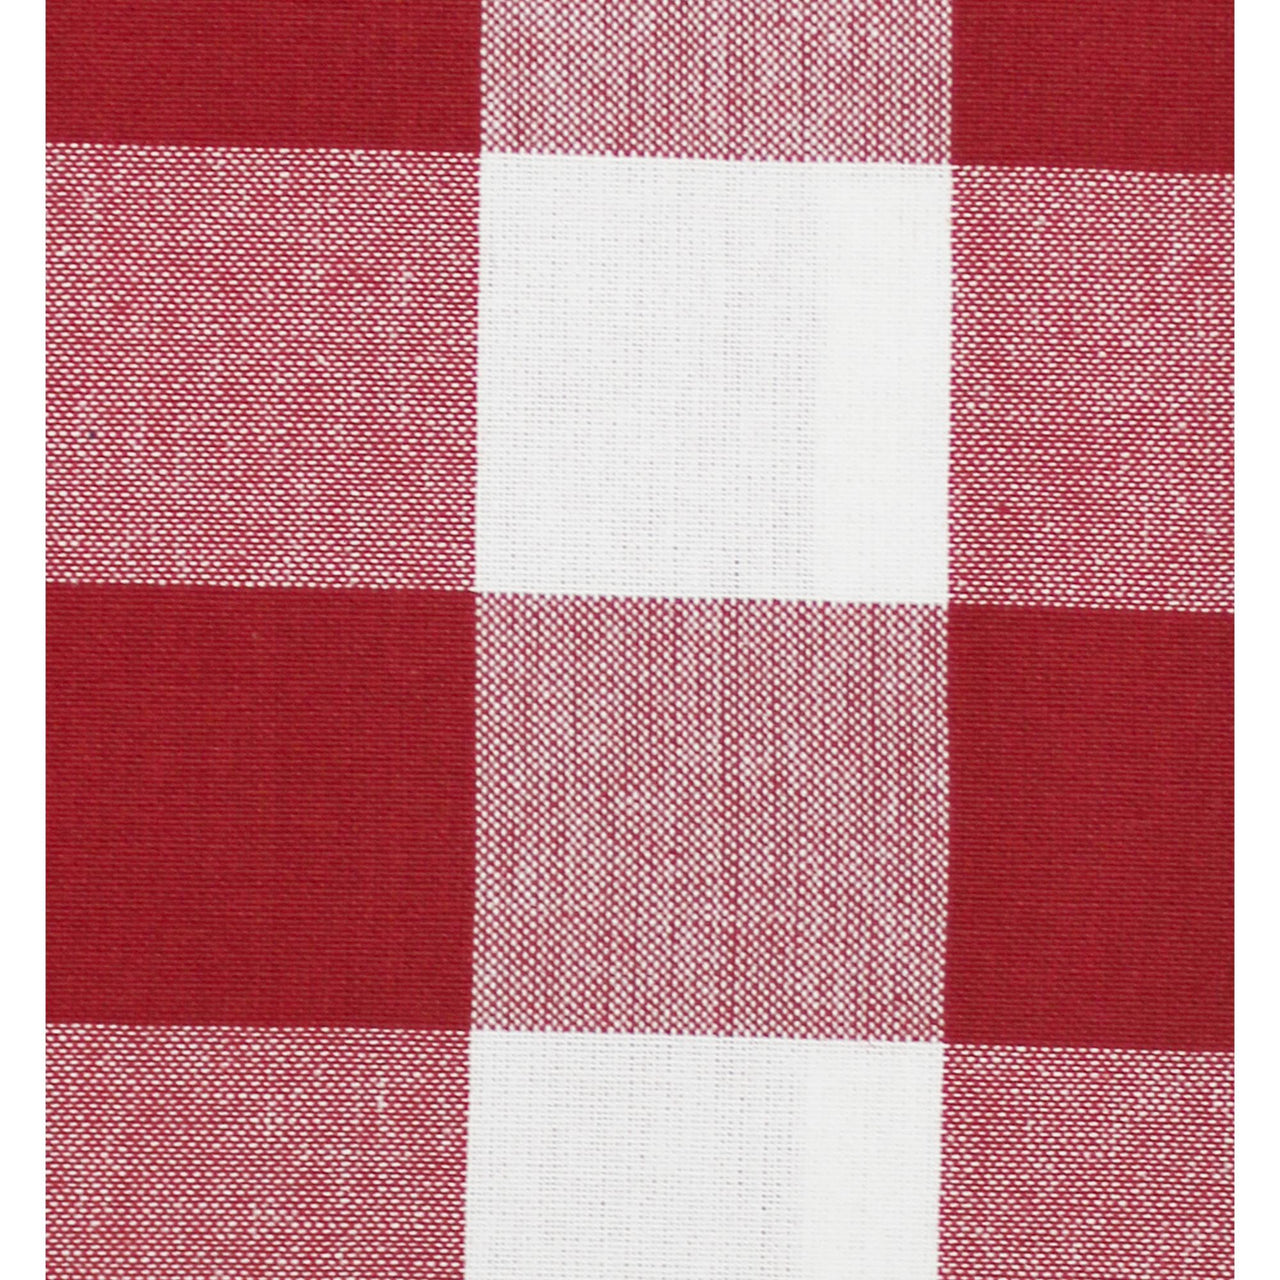 Buffalo Check Crimson Red Kitchen Towel KT510019